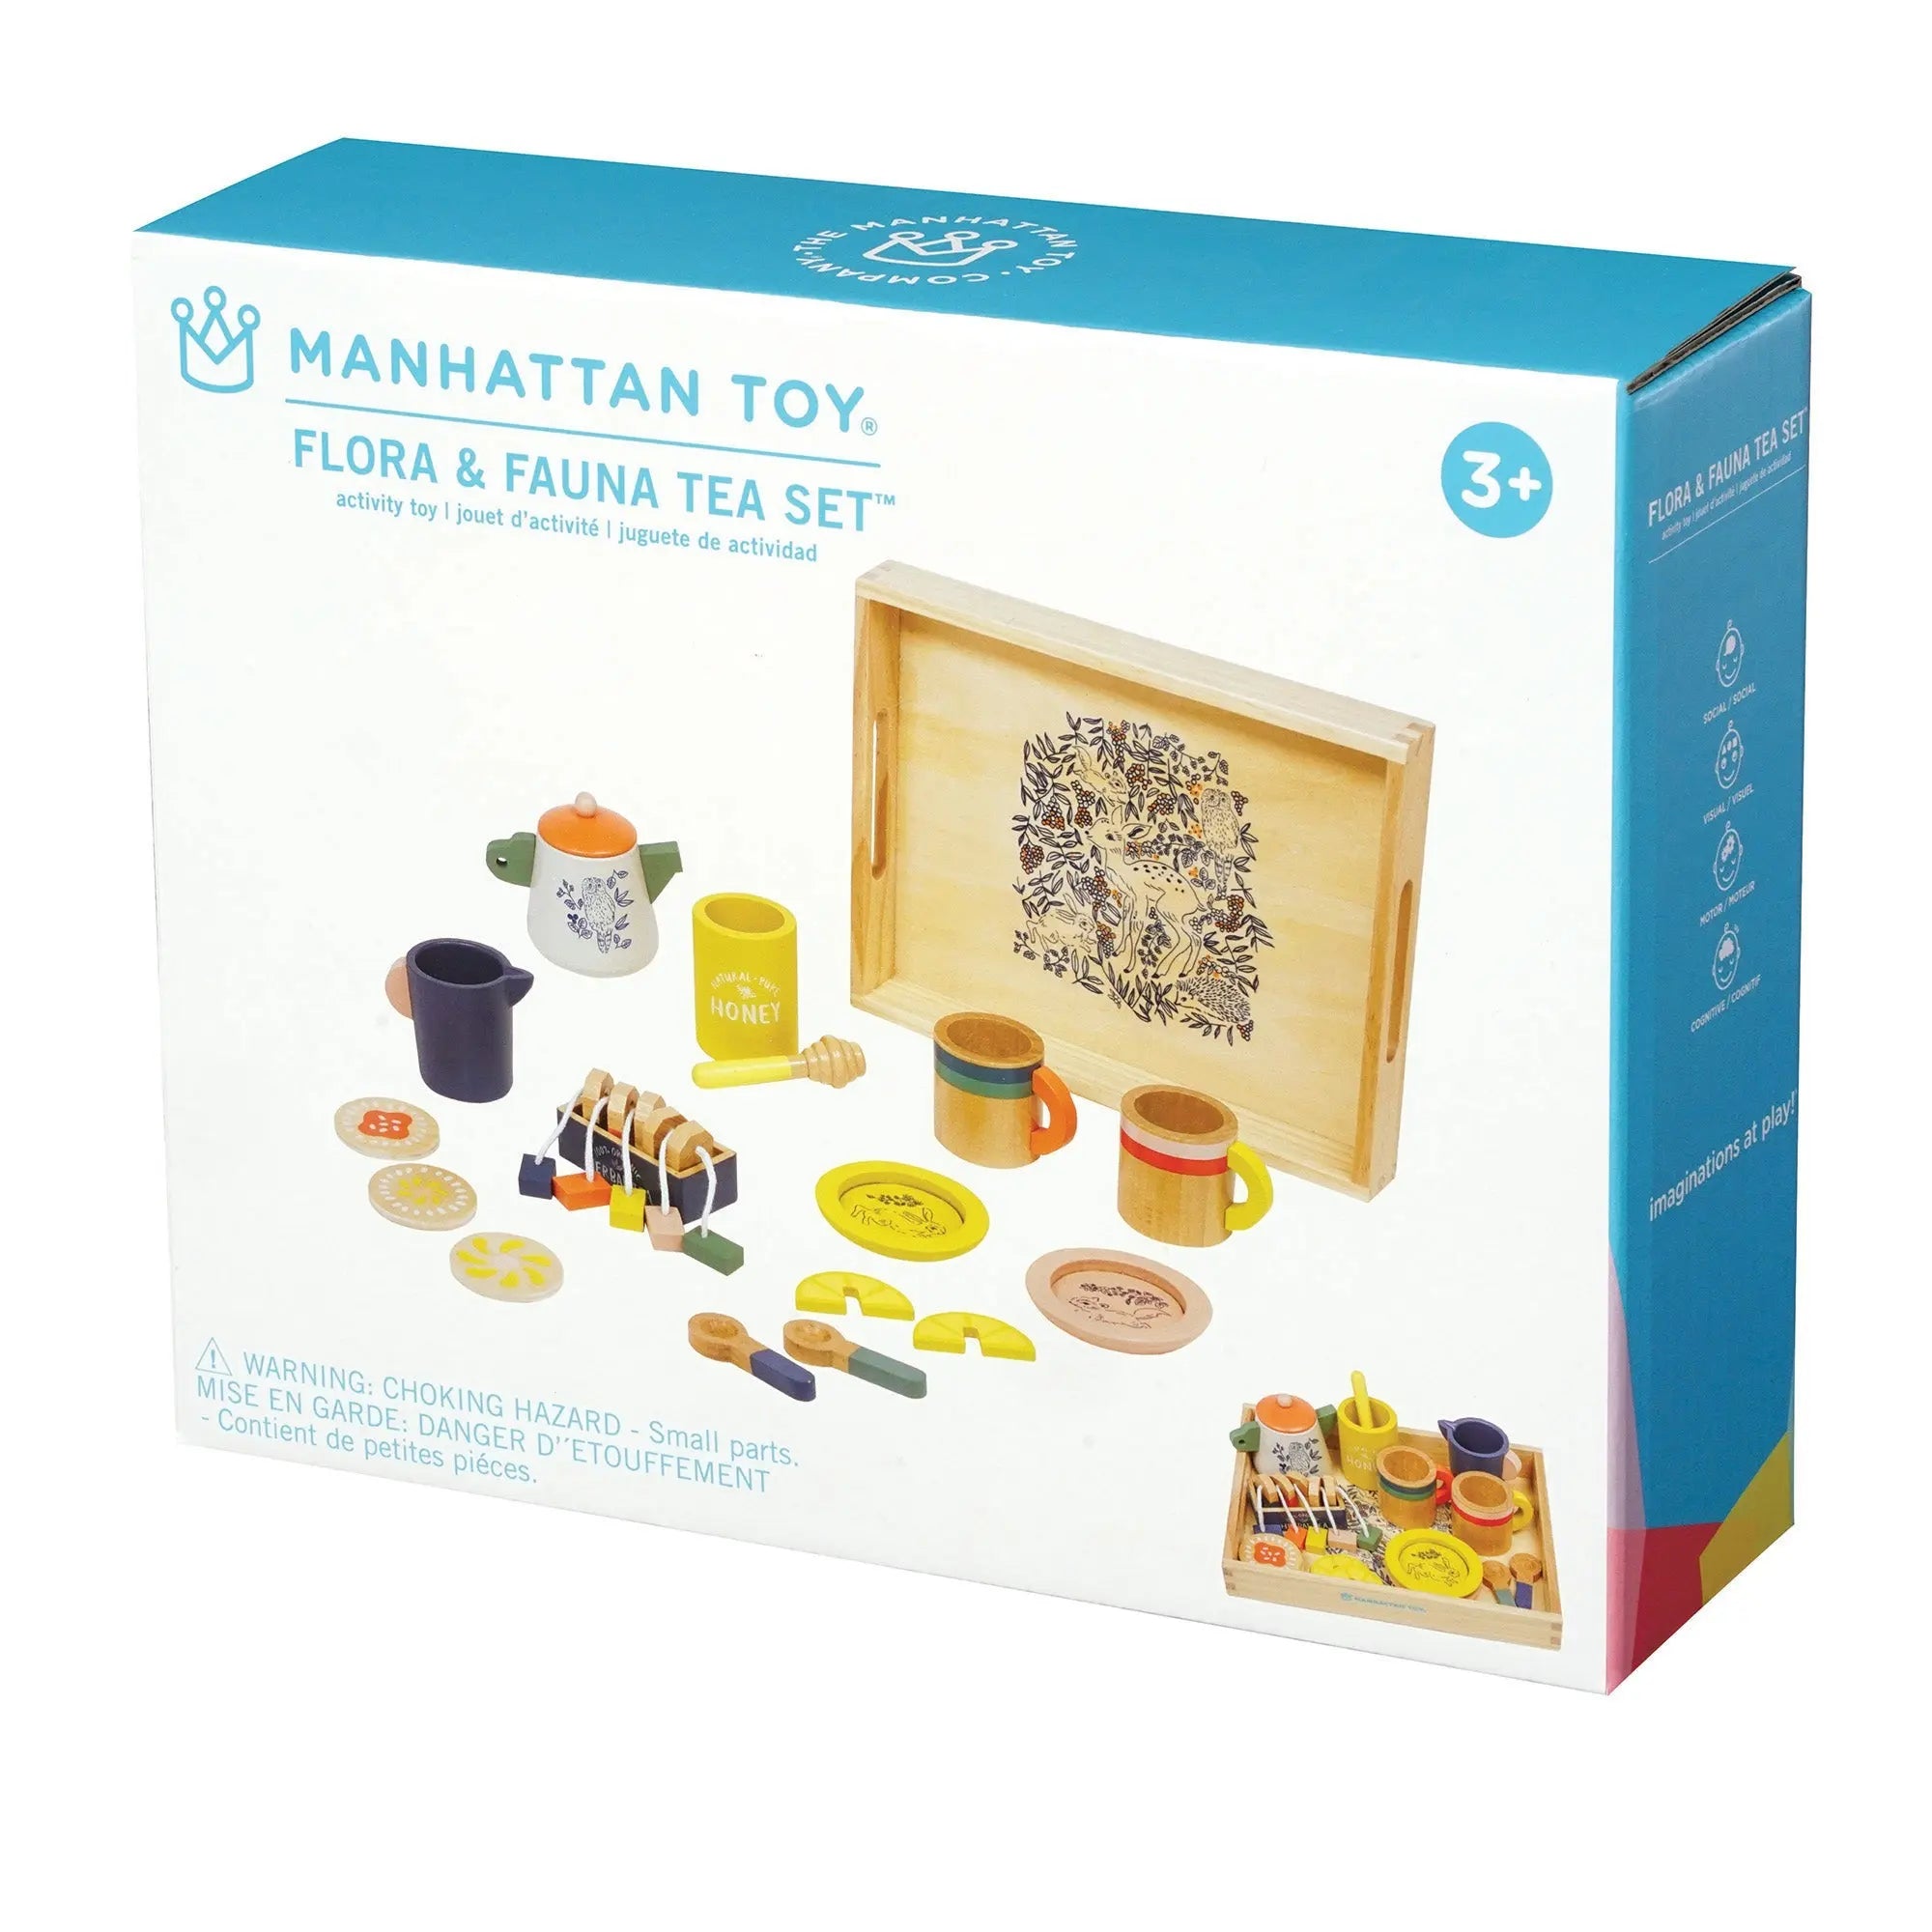 Manhattan Toy Flora & Fauna Tea Set Play Tablewear